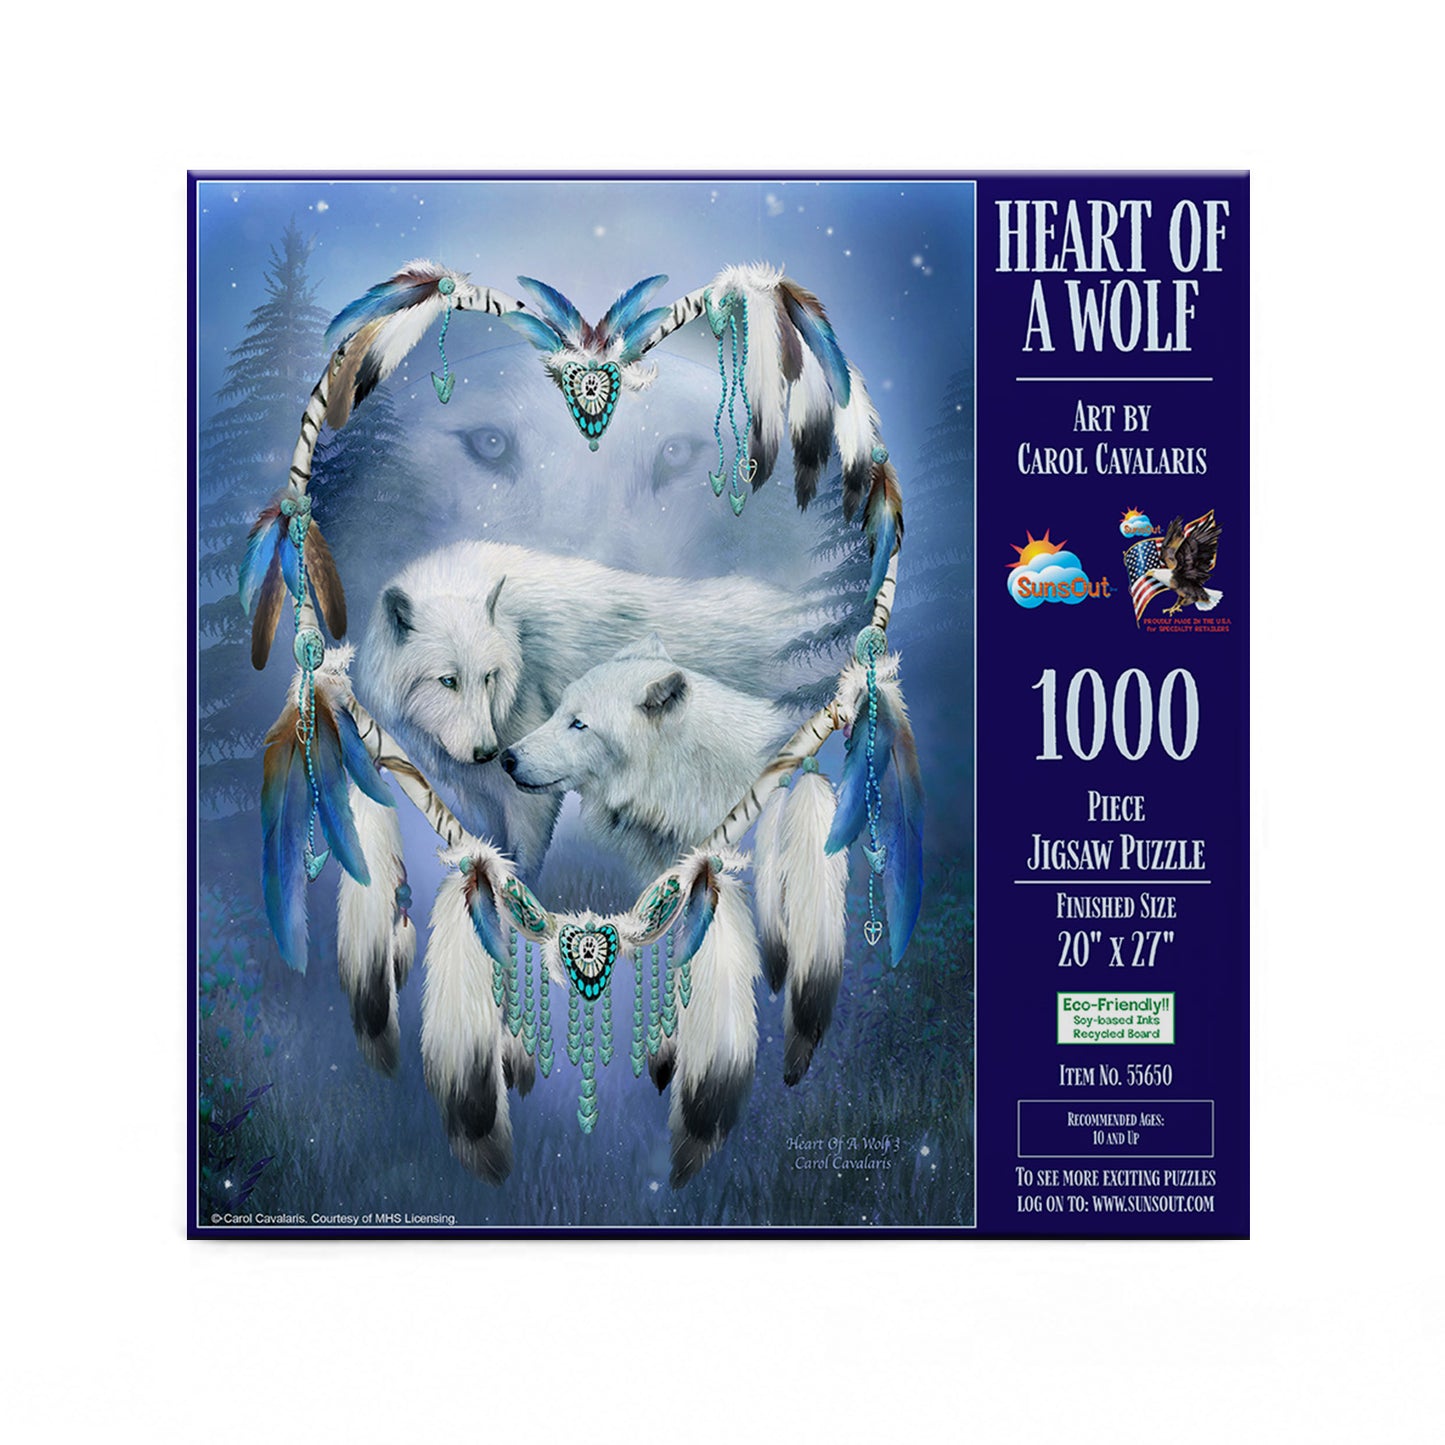 Heart of a Wolf af Carol Cavalaris, 1000 puslespil